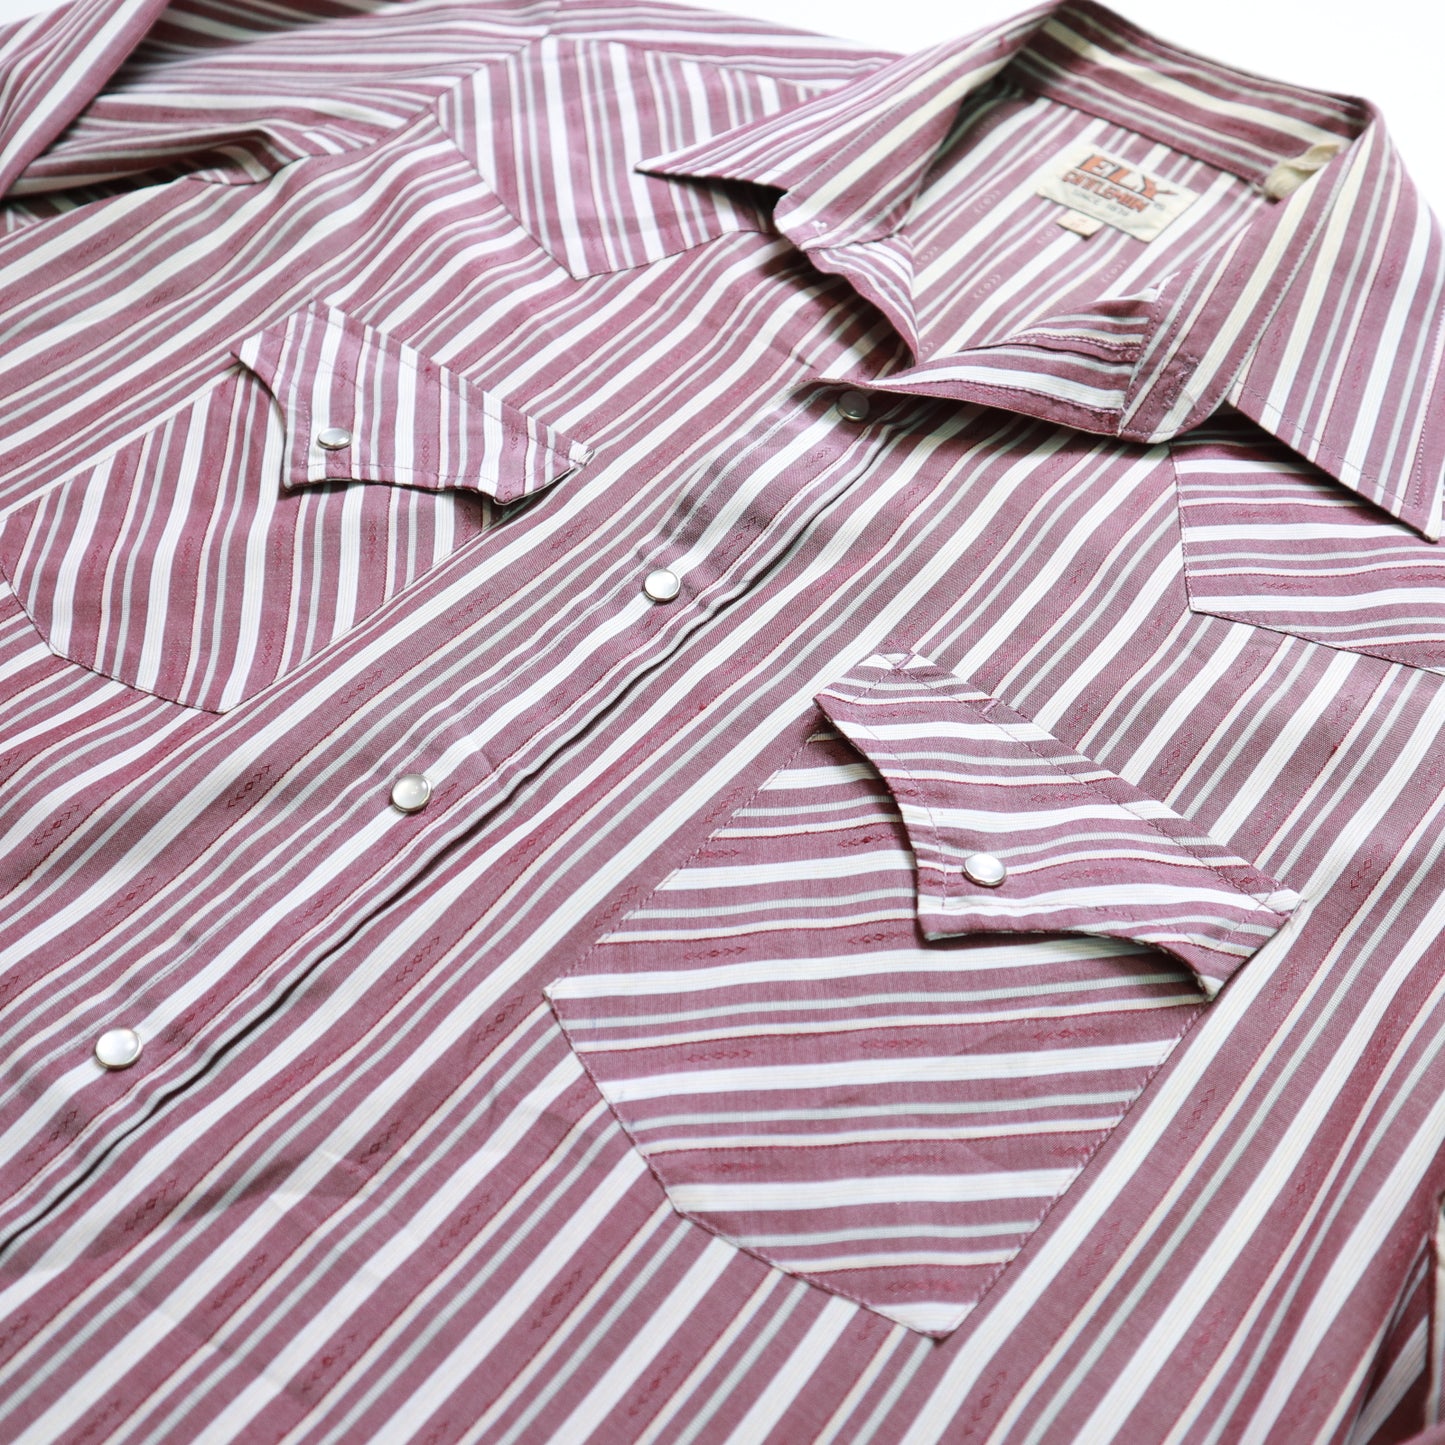 80-90s ELY Cattleman Western Shirt 粉紫條紋西部襯衫 Ranchwear 古著襯衫